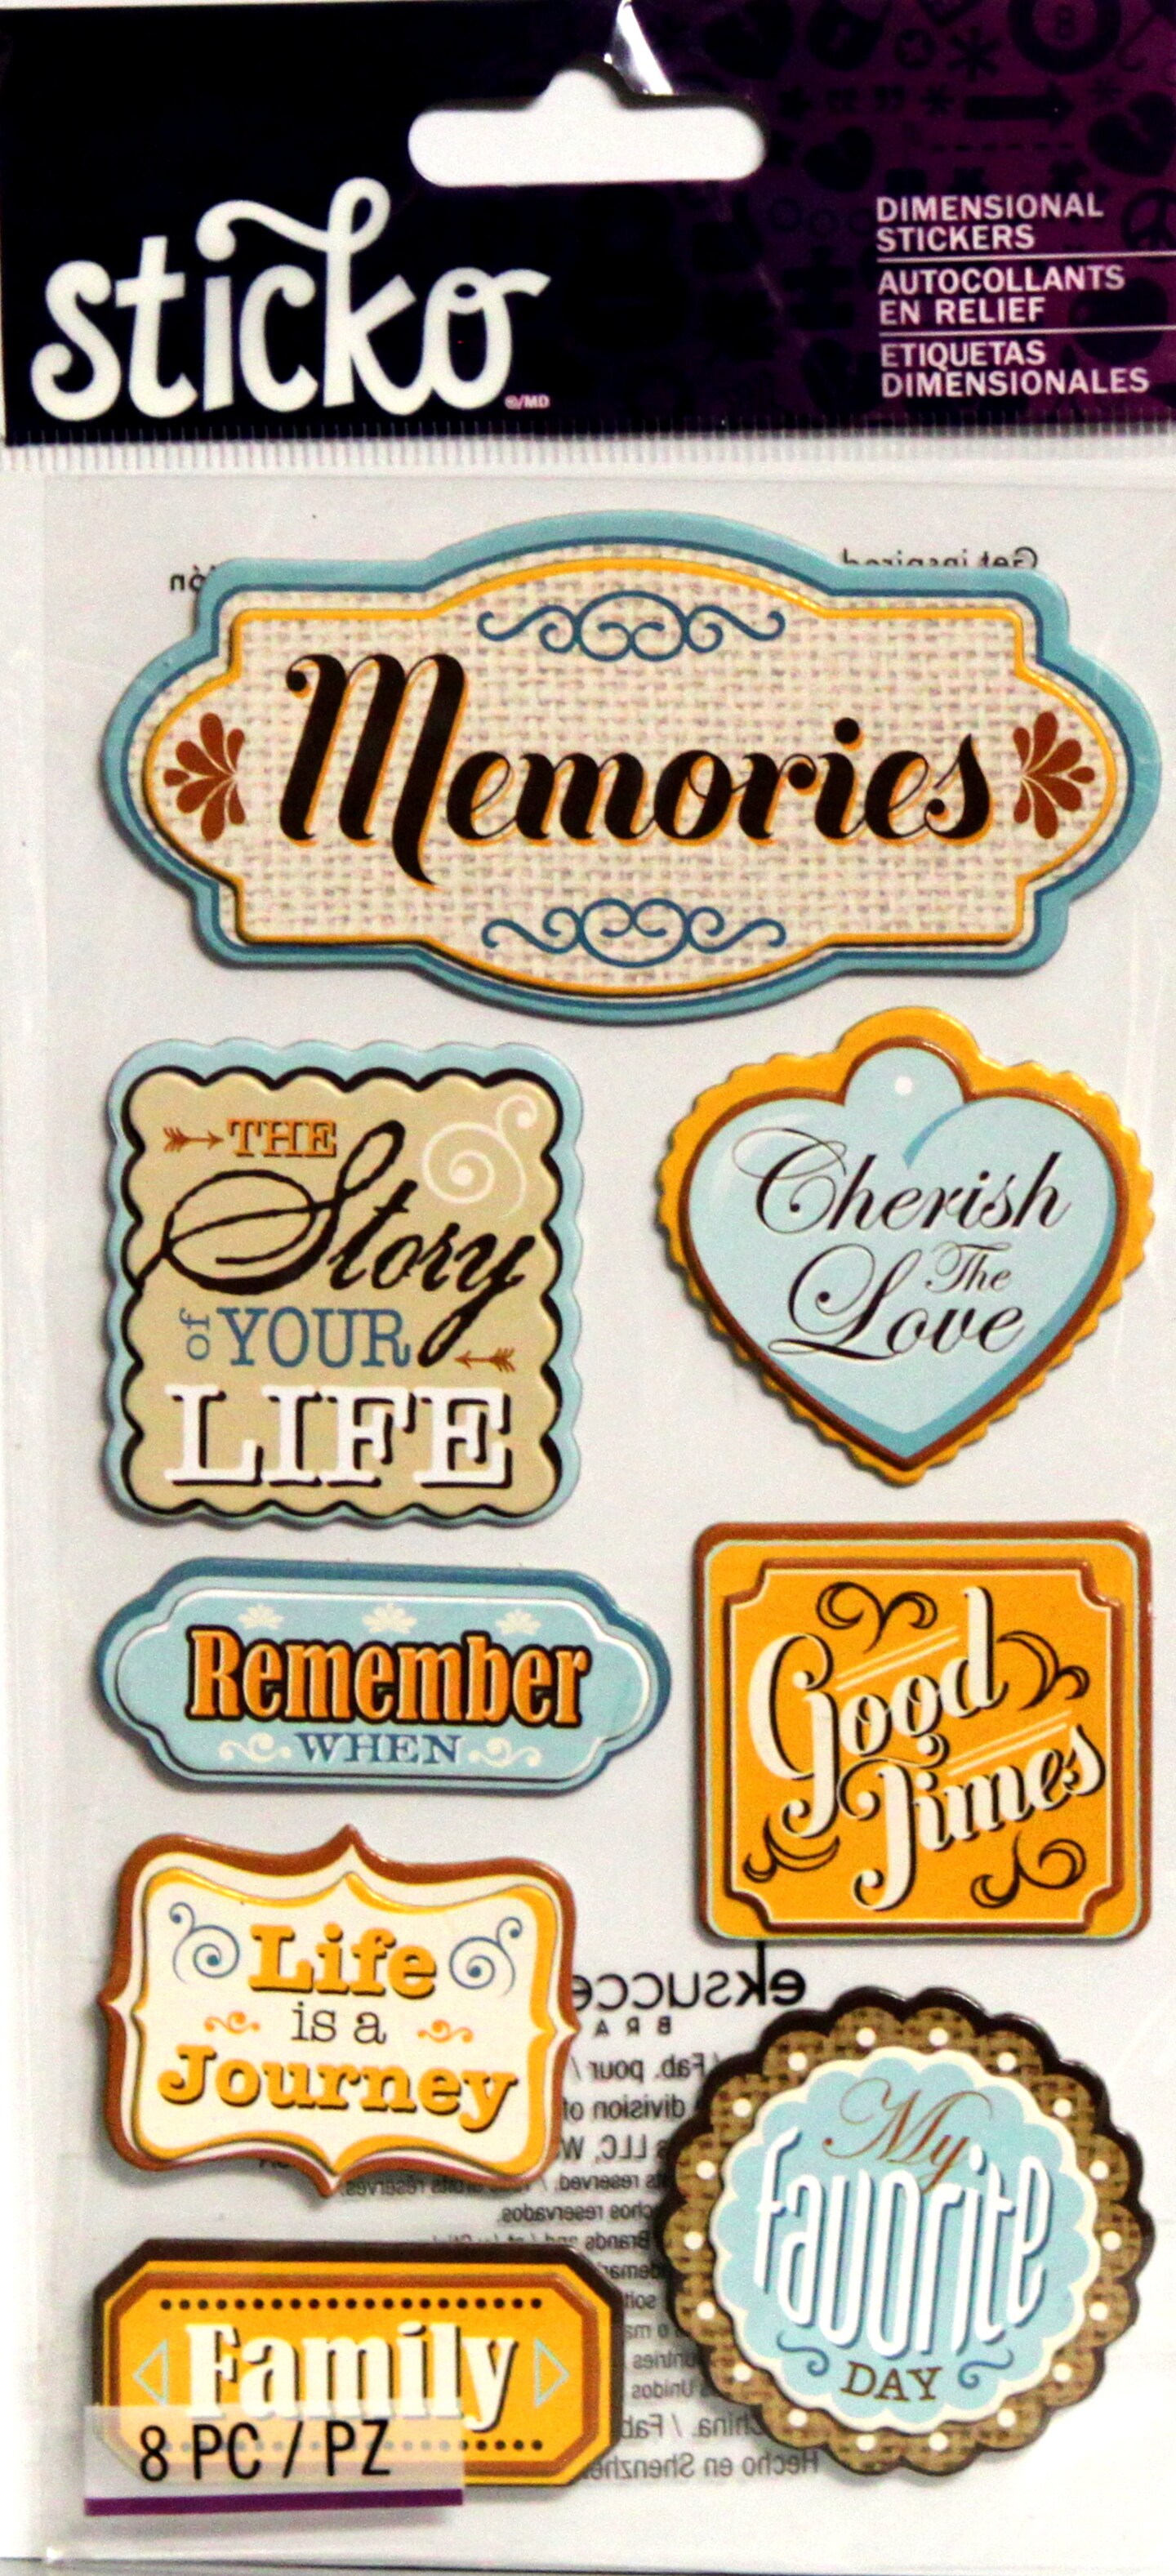 Sticko Wonderful Memories Dimensional Stickers